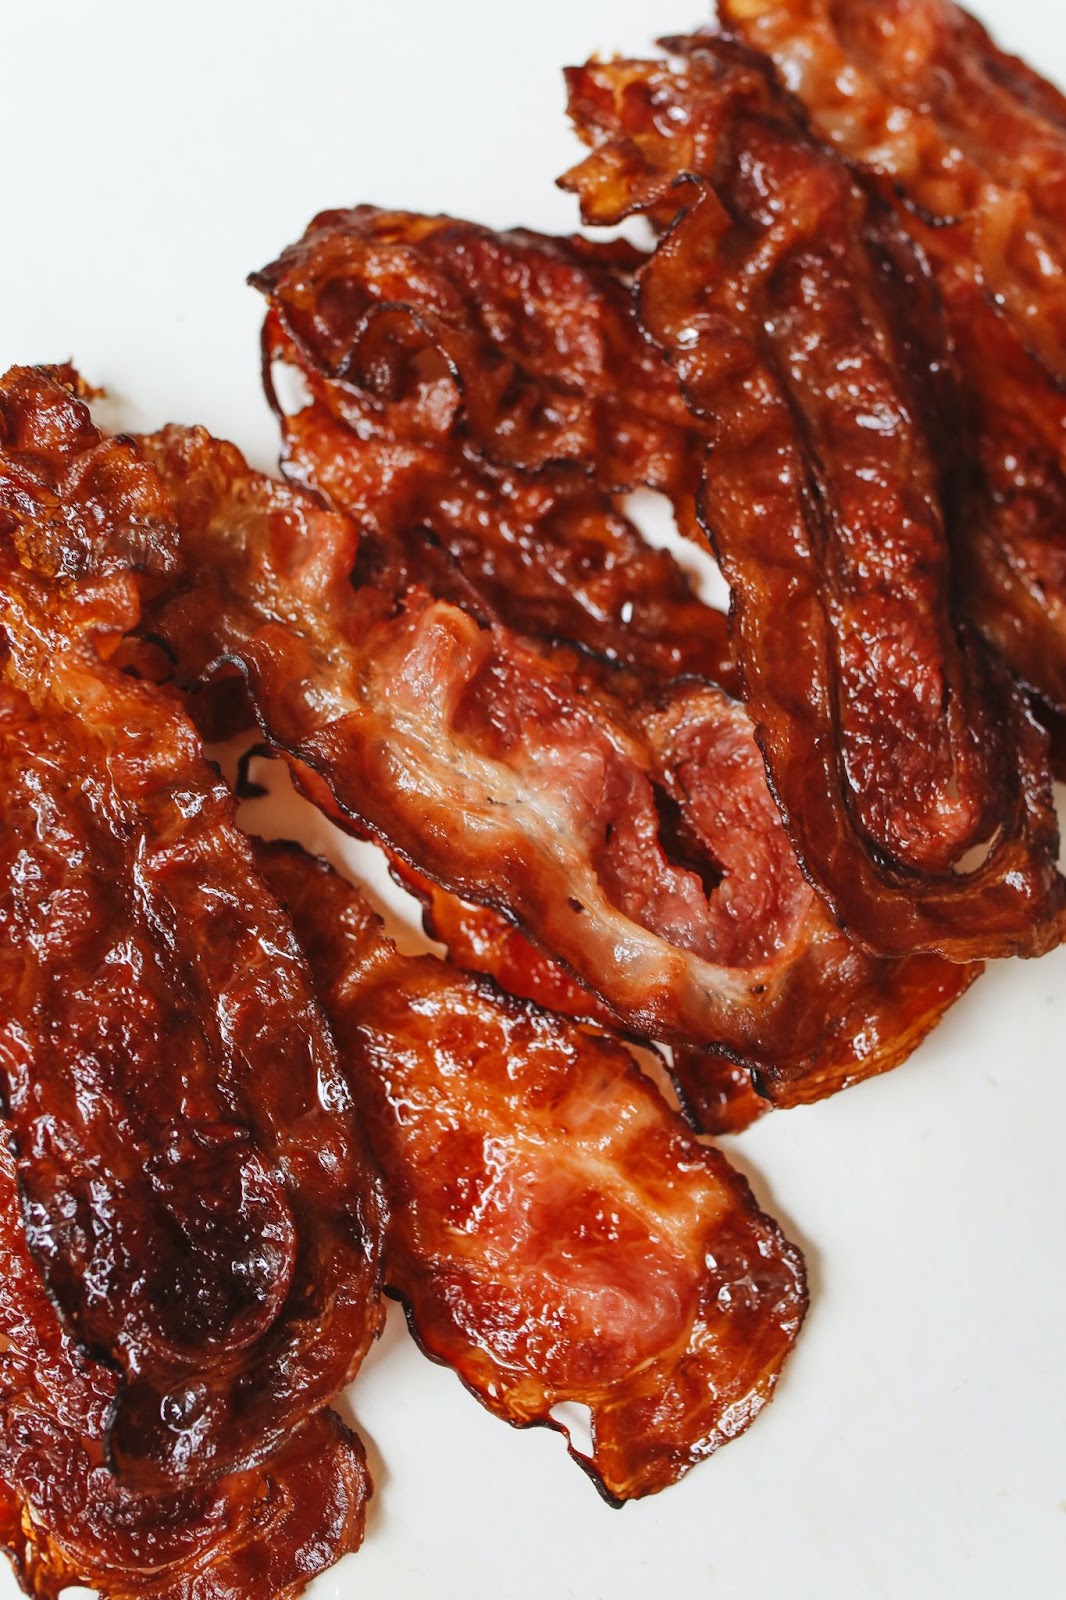 Mmmm... delicious juicy bacon strips